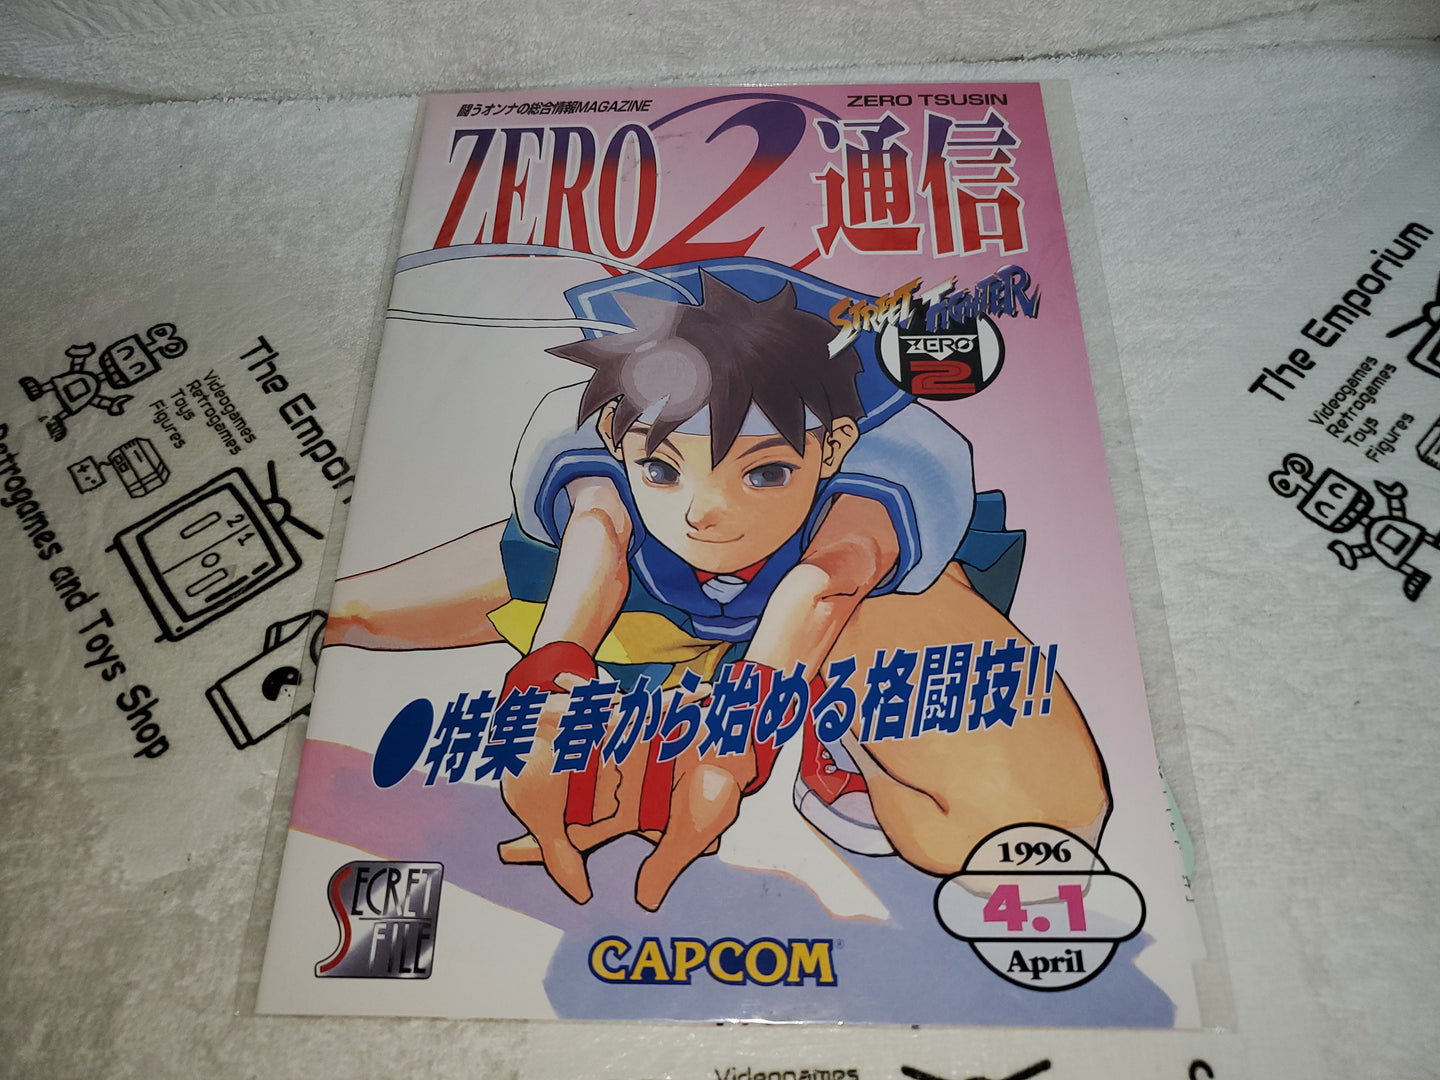 Capcom secret file : Street fighter zero 2 -  arcade artset art set